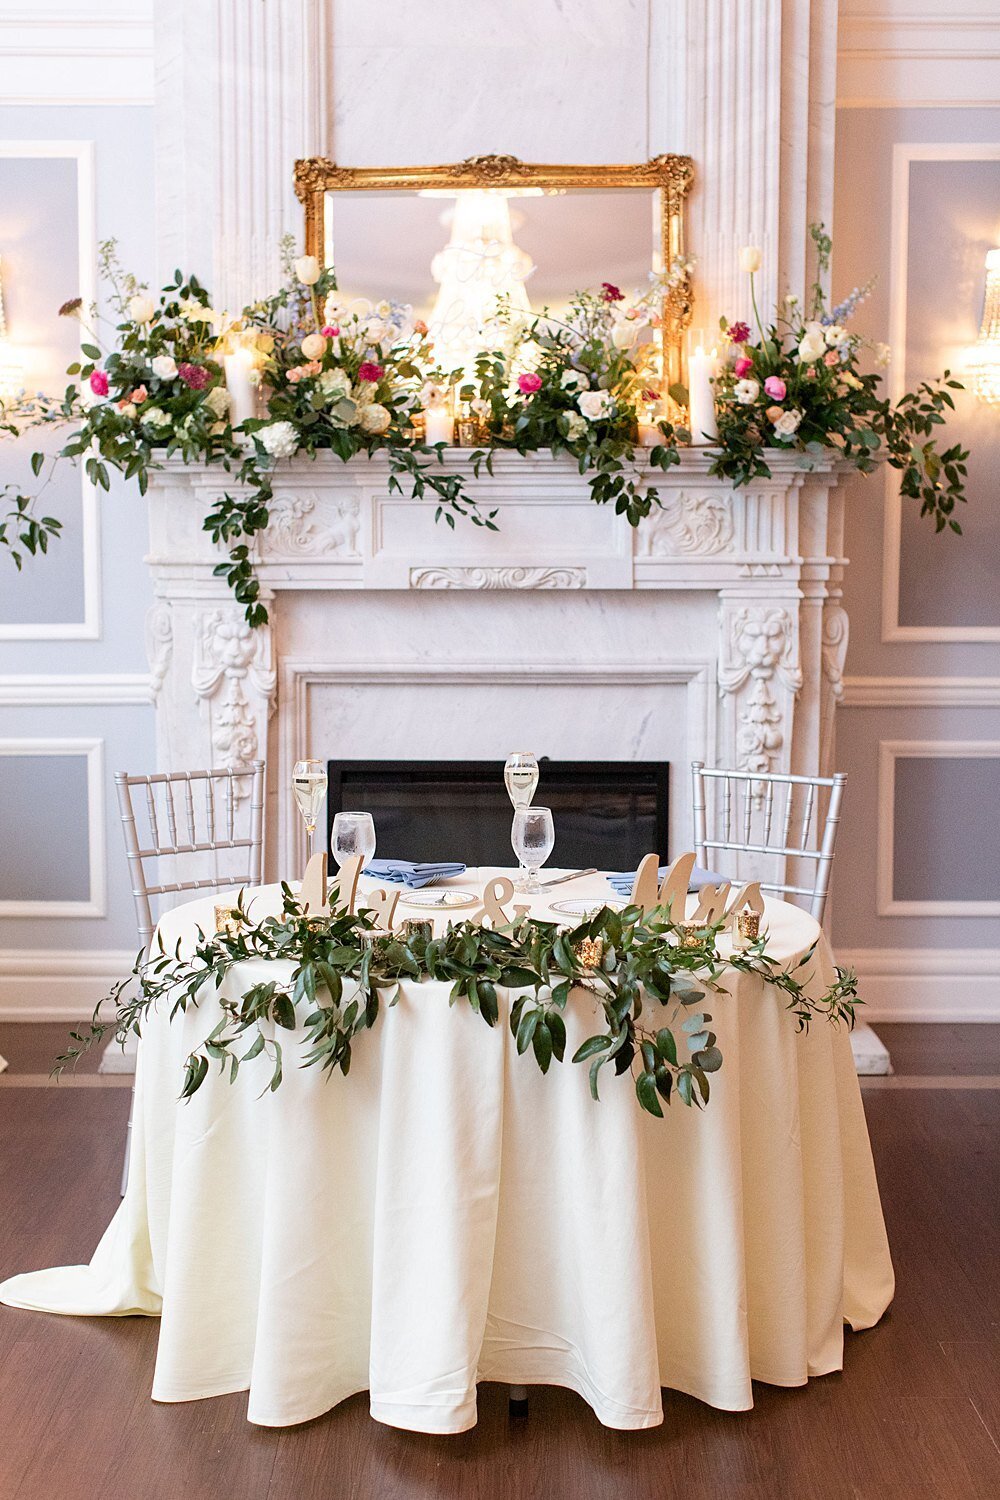 Leigh Florist Design Studio Audubon NJ creates the most magical wedding floral designs